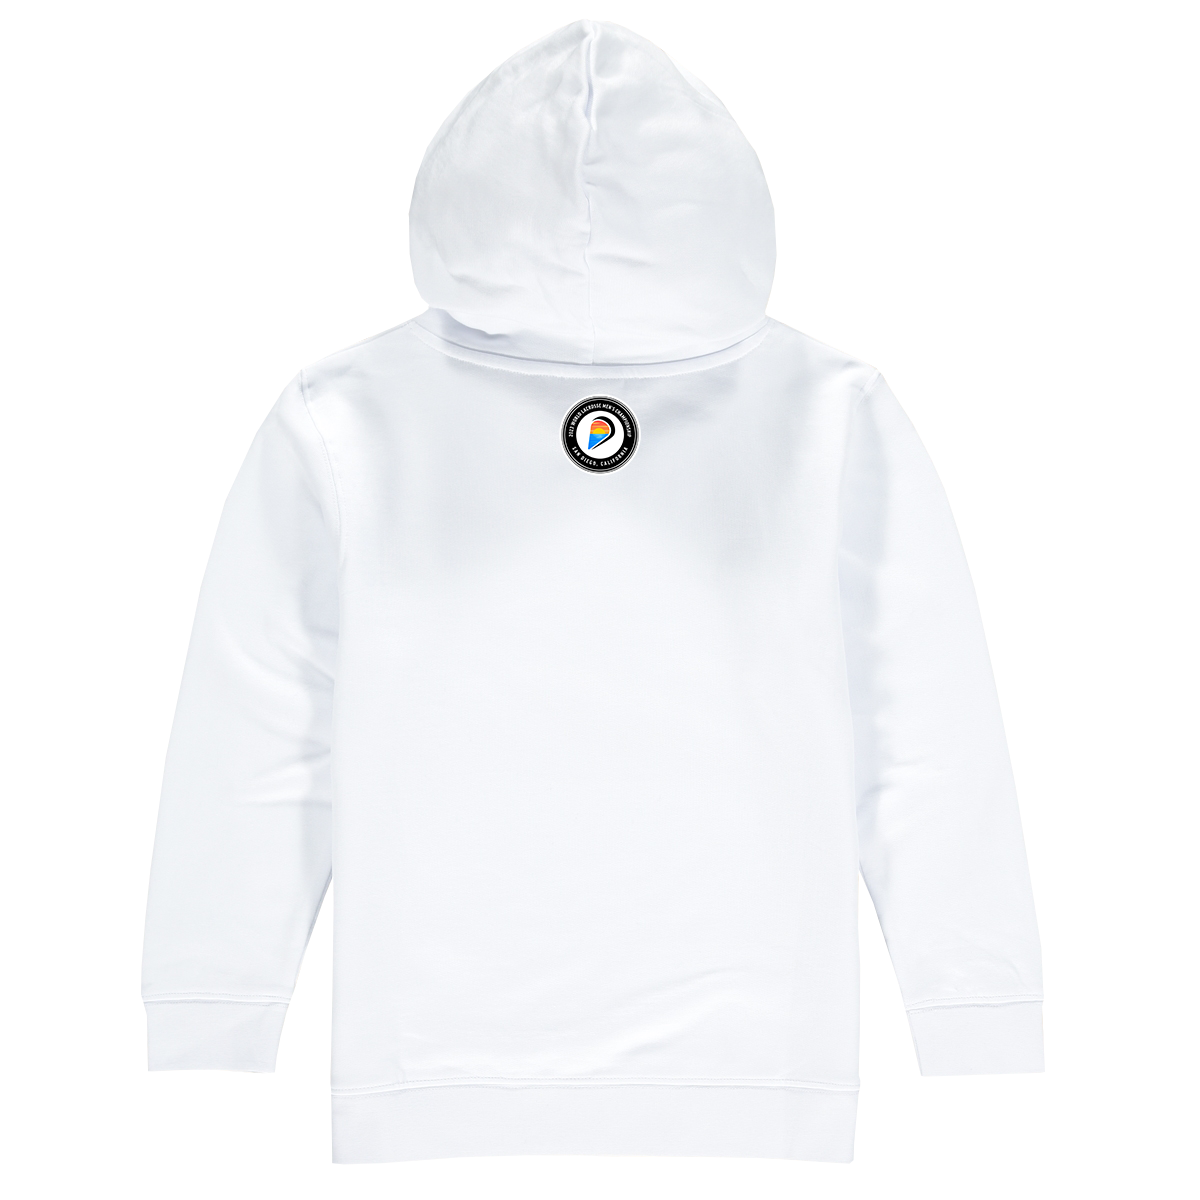 Puerto Rico Premium Unisex Hoodie Sweatshirt White